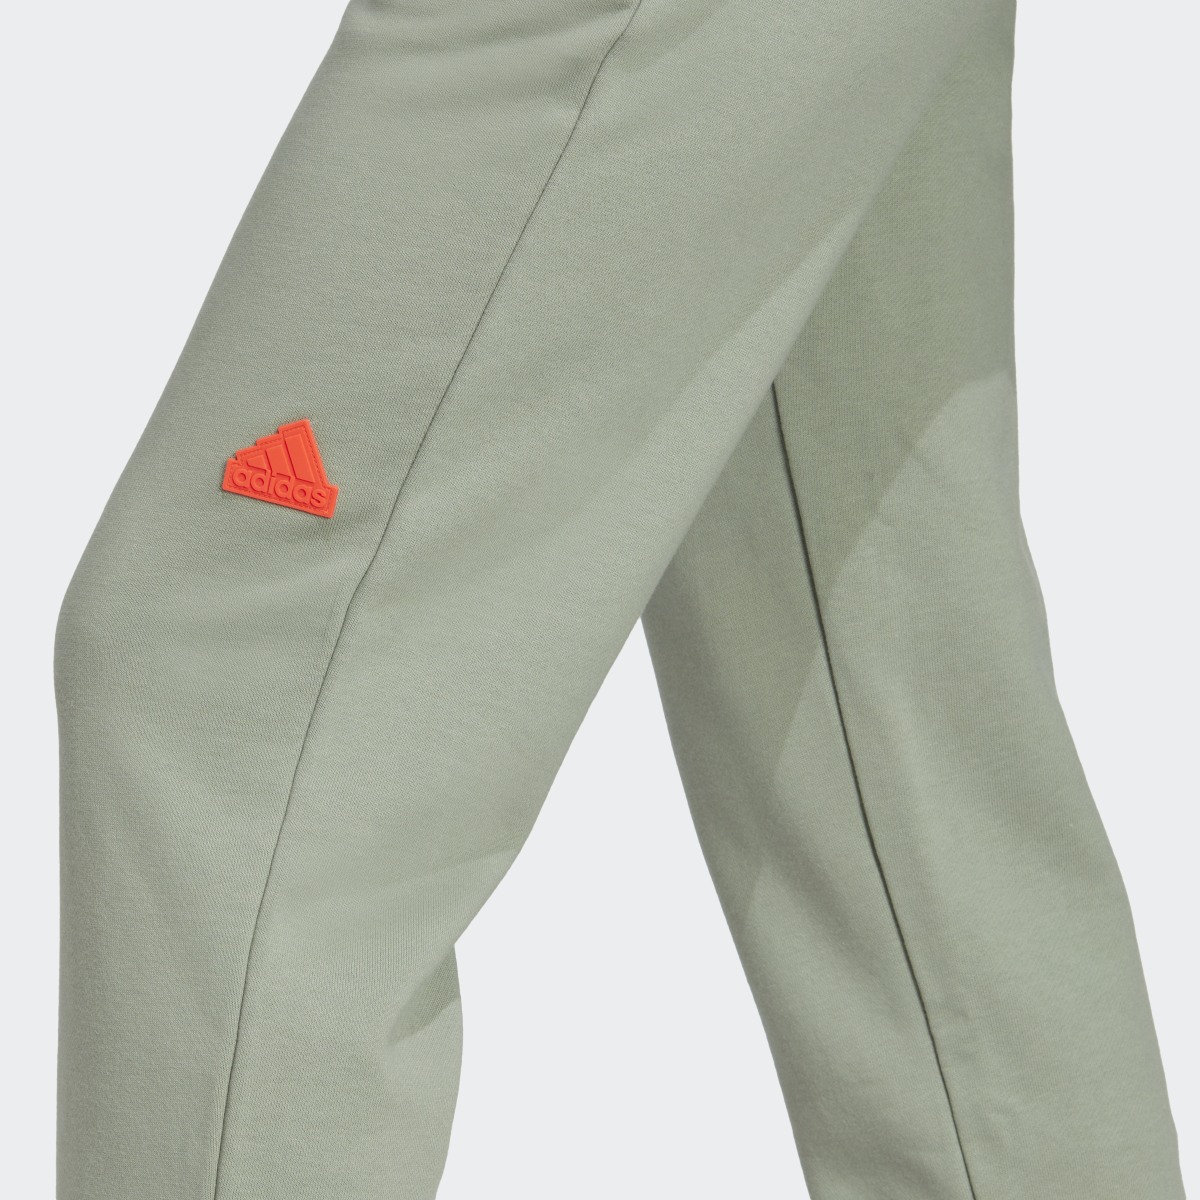 Adidas City Escape Regular-Fit Pants. 6